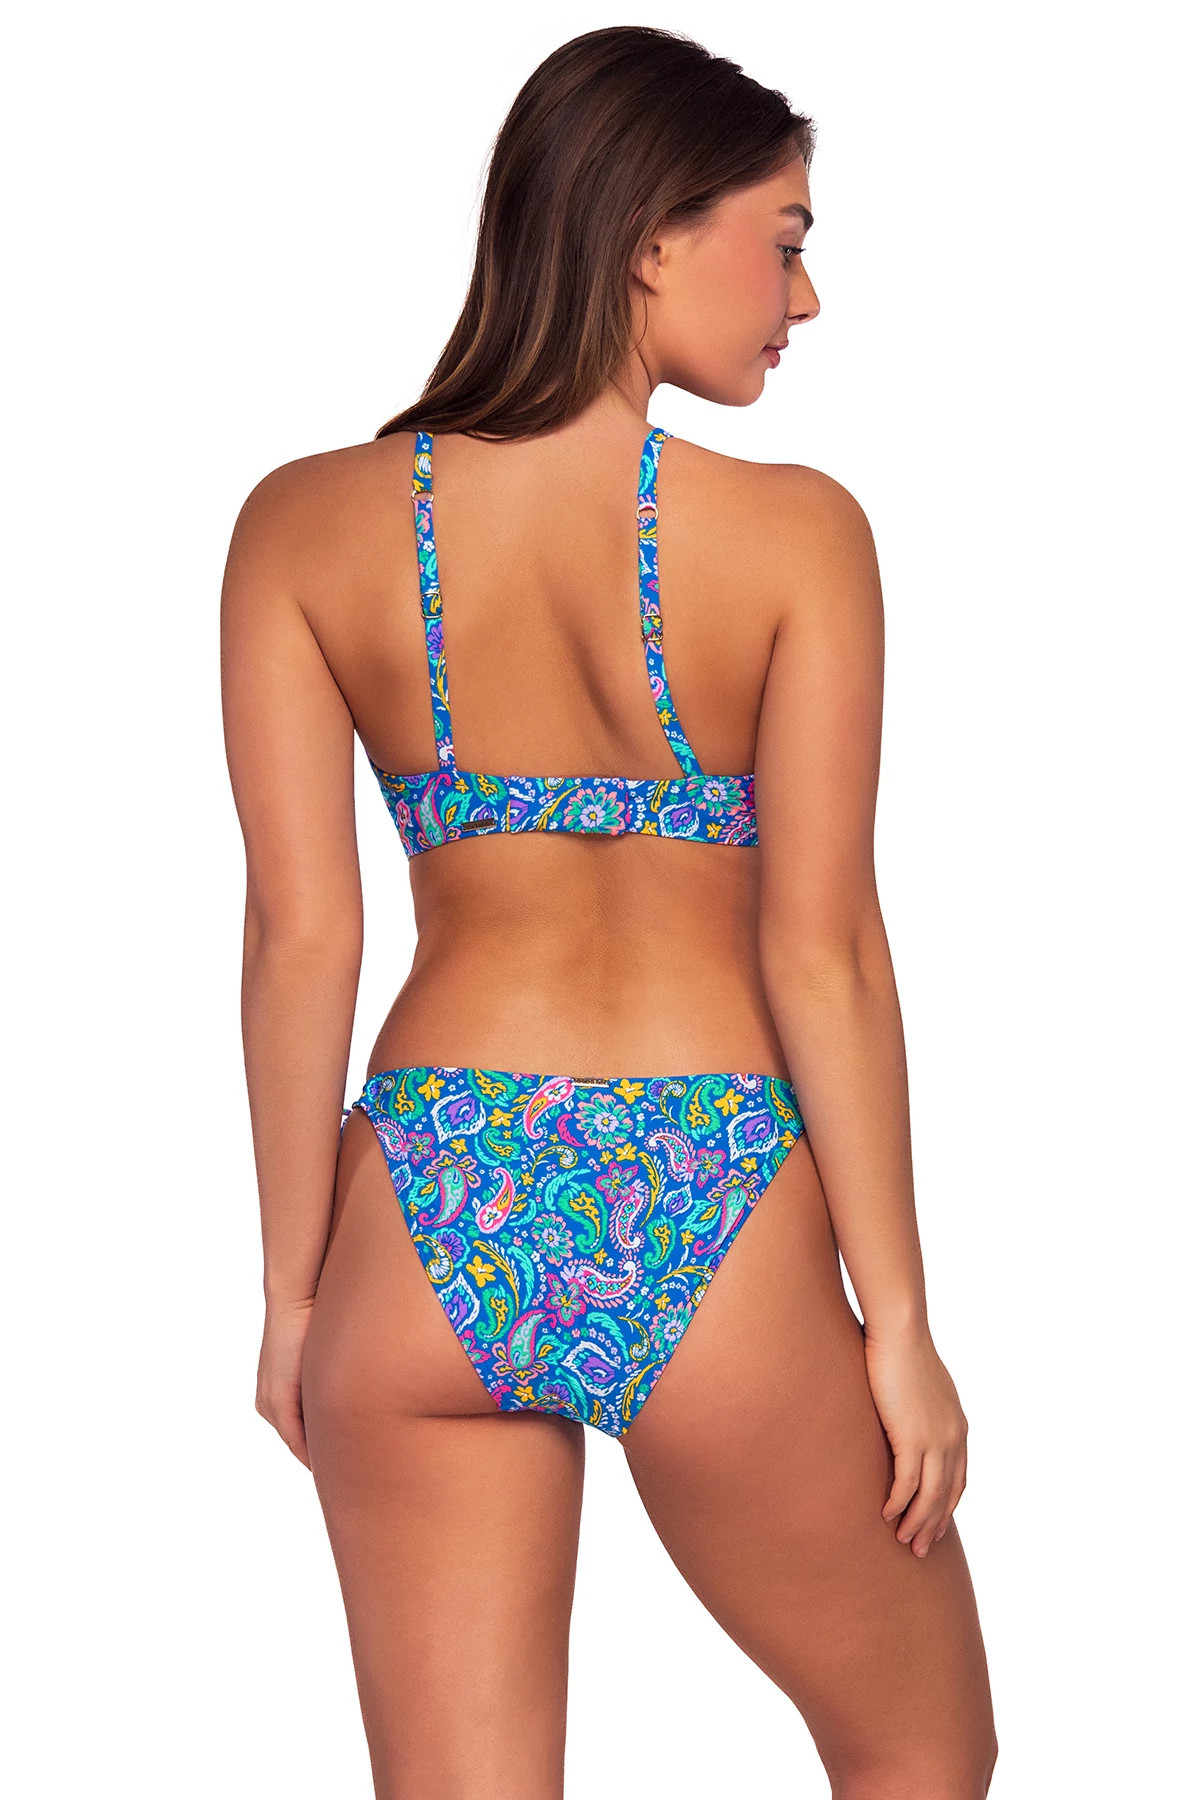 PERSIAN SKY Kauai Keyhole Bralette Bikini Top (D+ Cup) image number 2